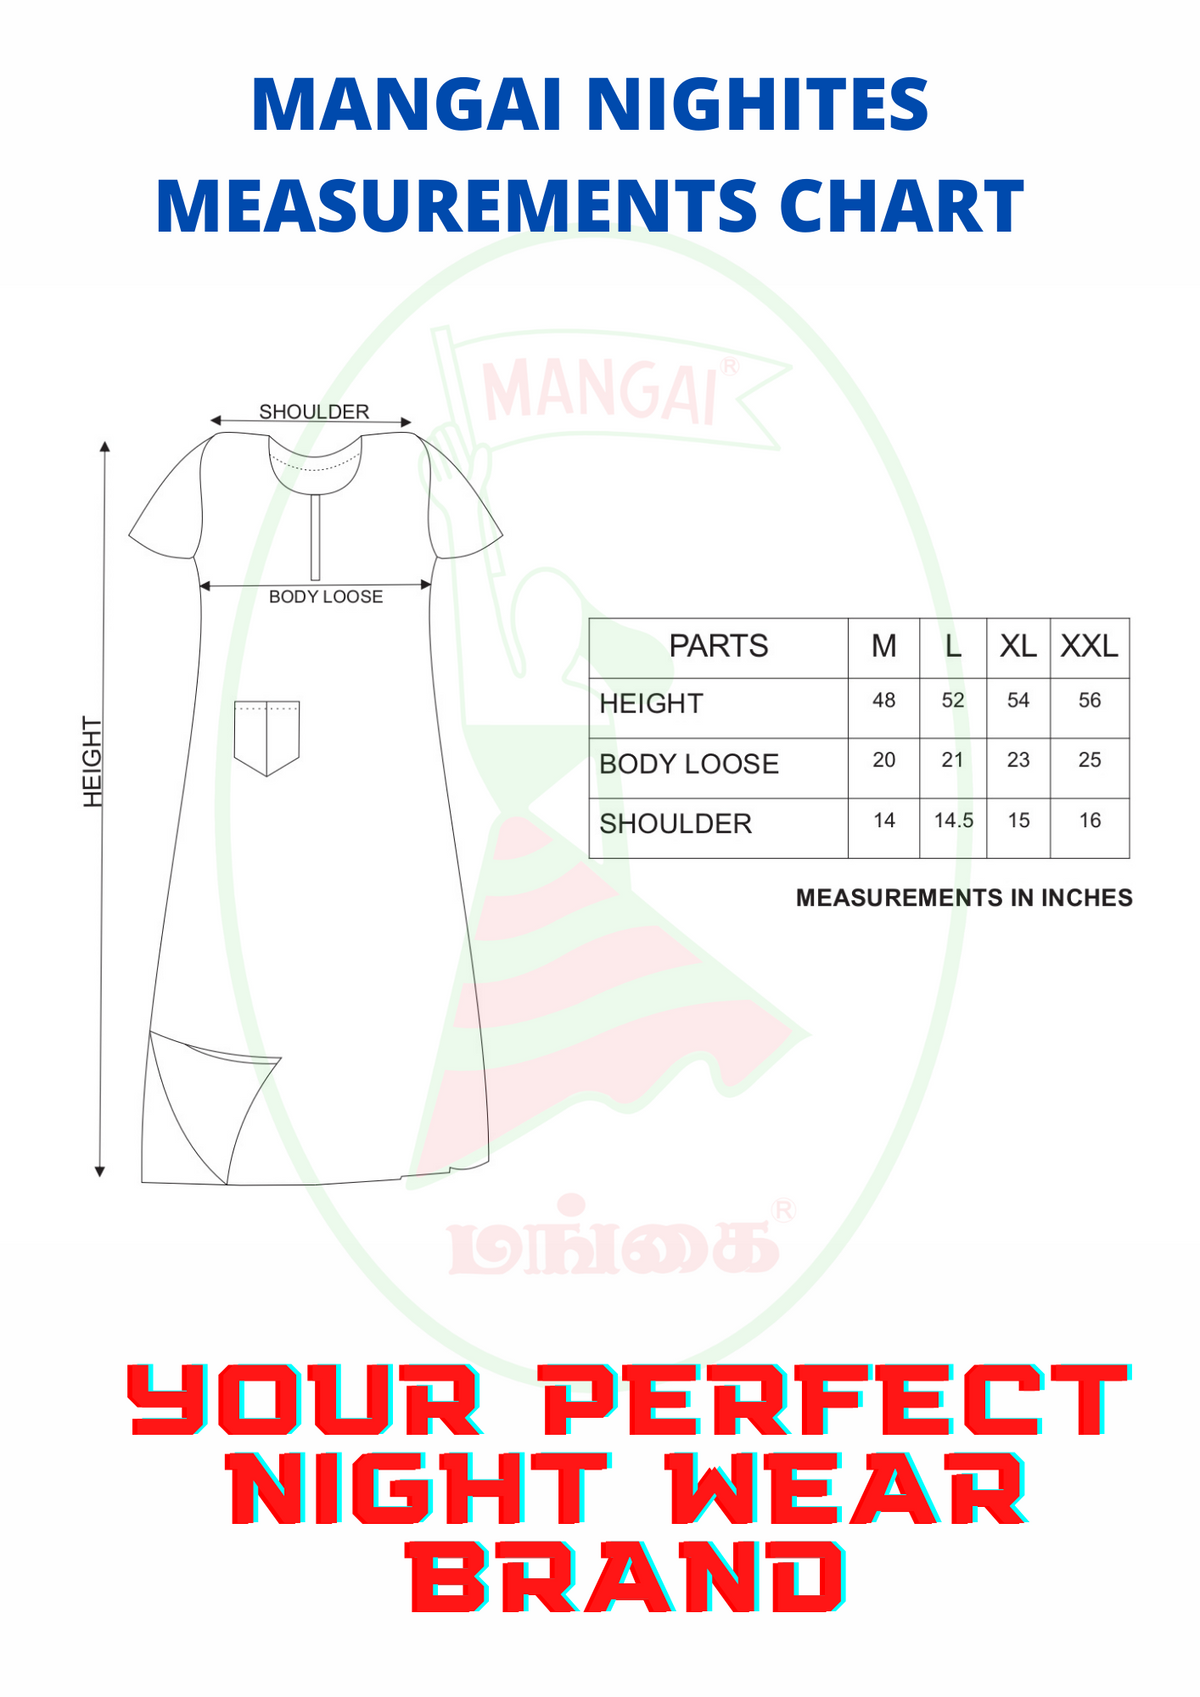 MANGAI Premium Cotton Nighties- All Over Printed Stylish Nightwear for Stylish Women | Updated Collection's